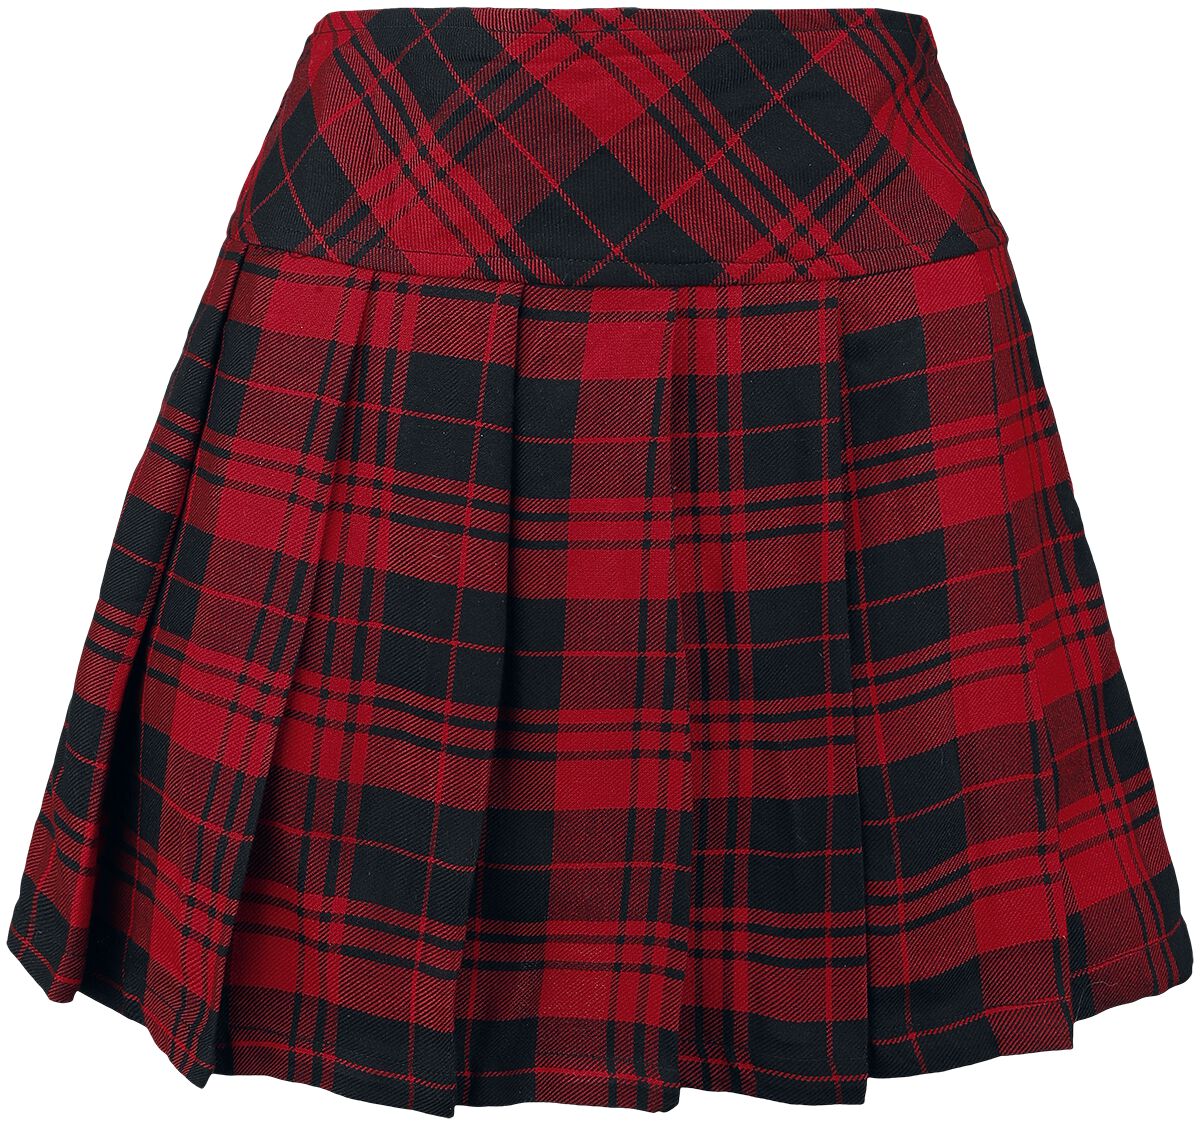 Heartless Zorya Skirt Kurzer Rock rot schwarz in M